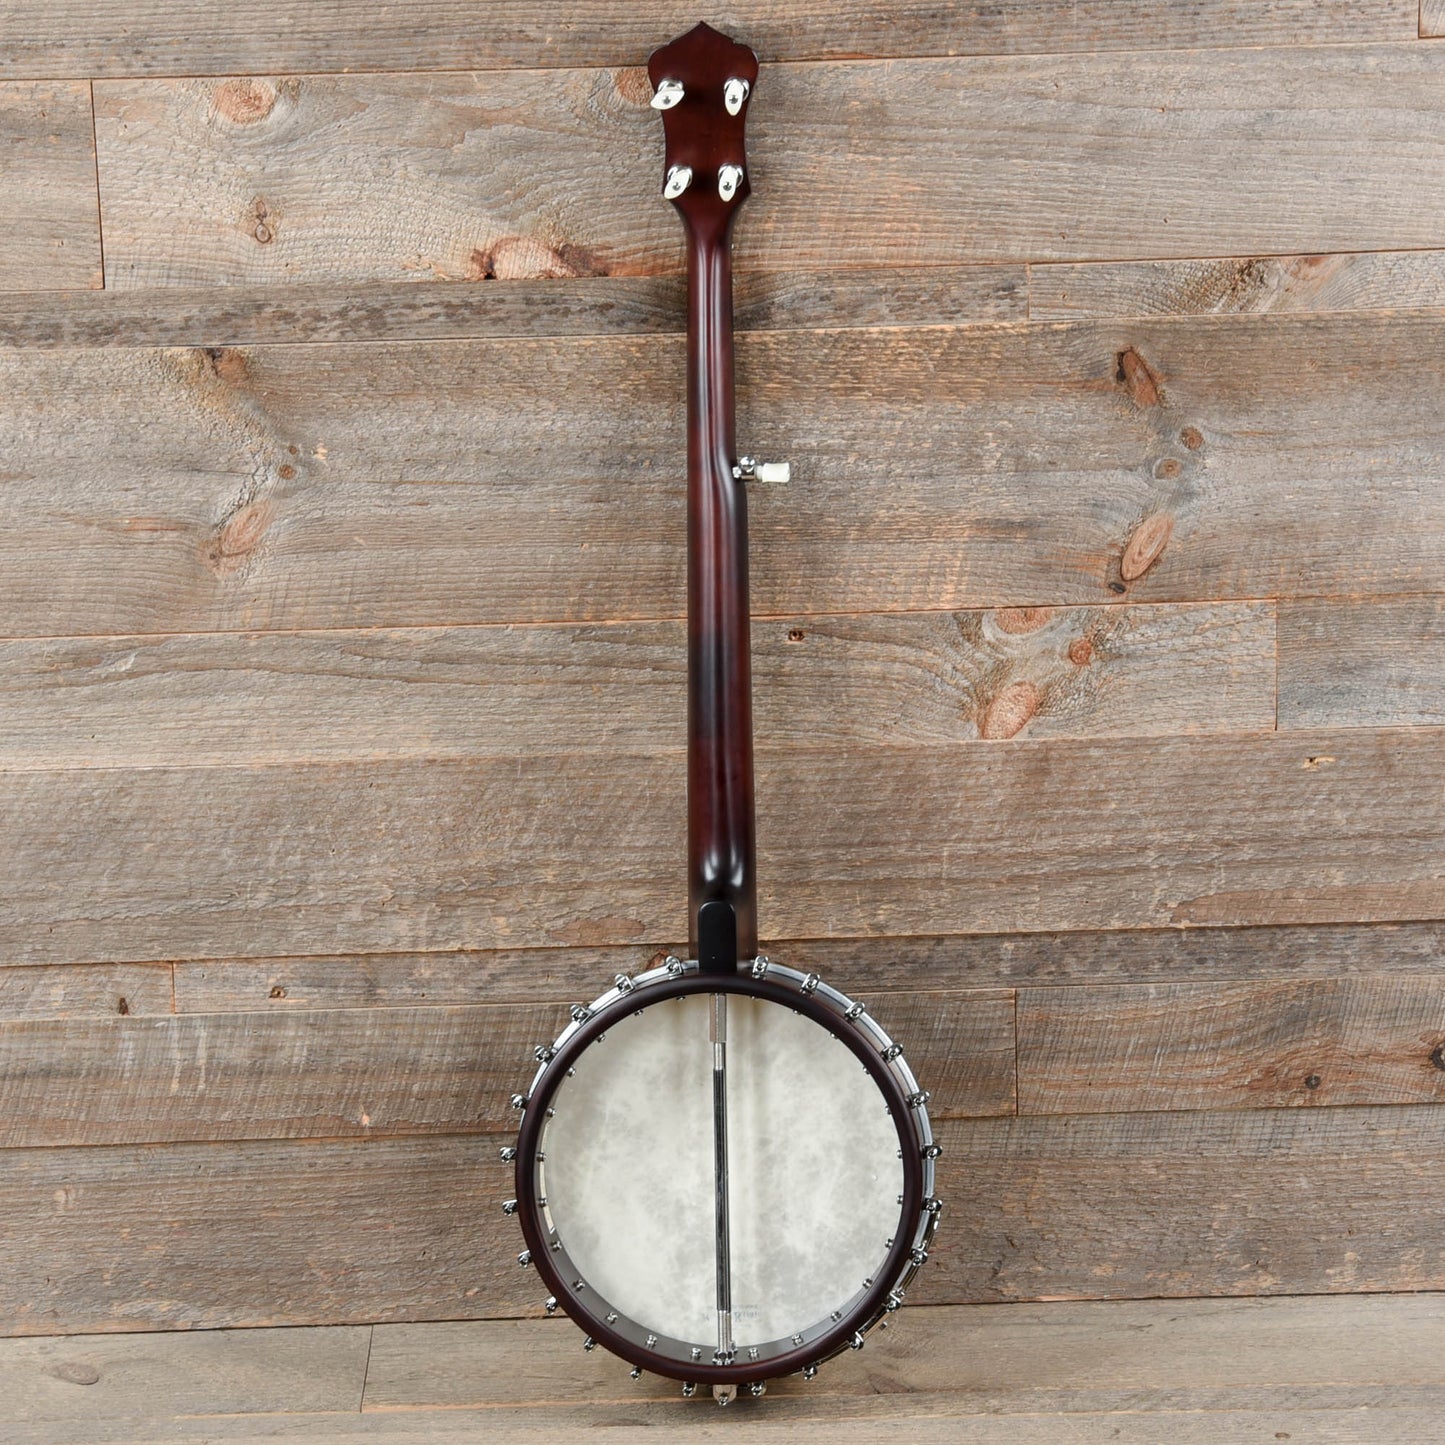 Recording King Madison Open Back Banjo Scooped Fretboard Folk Instruments / Banjos